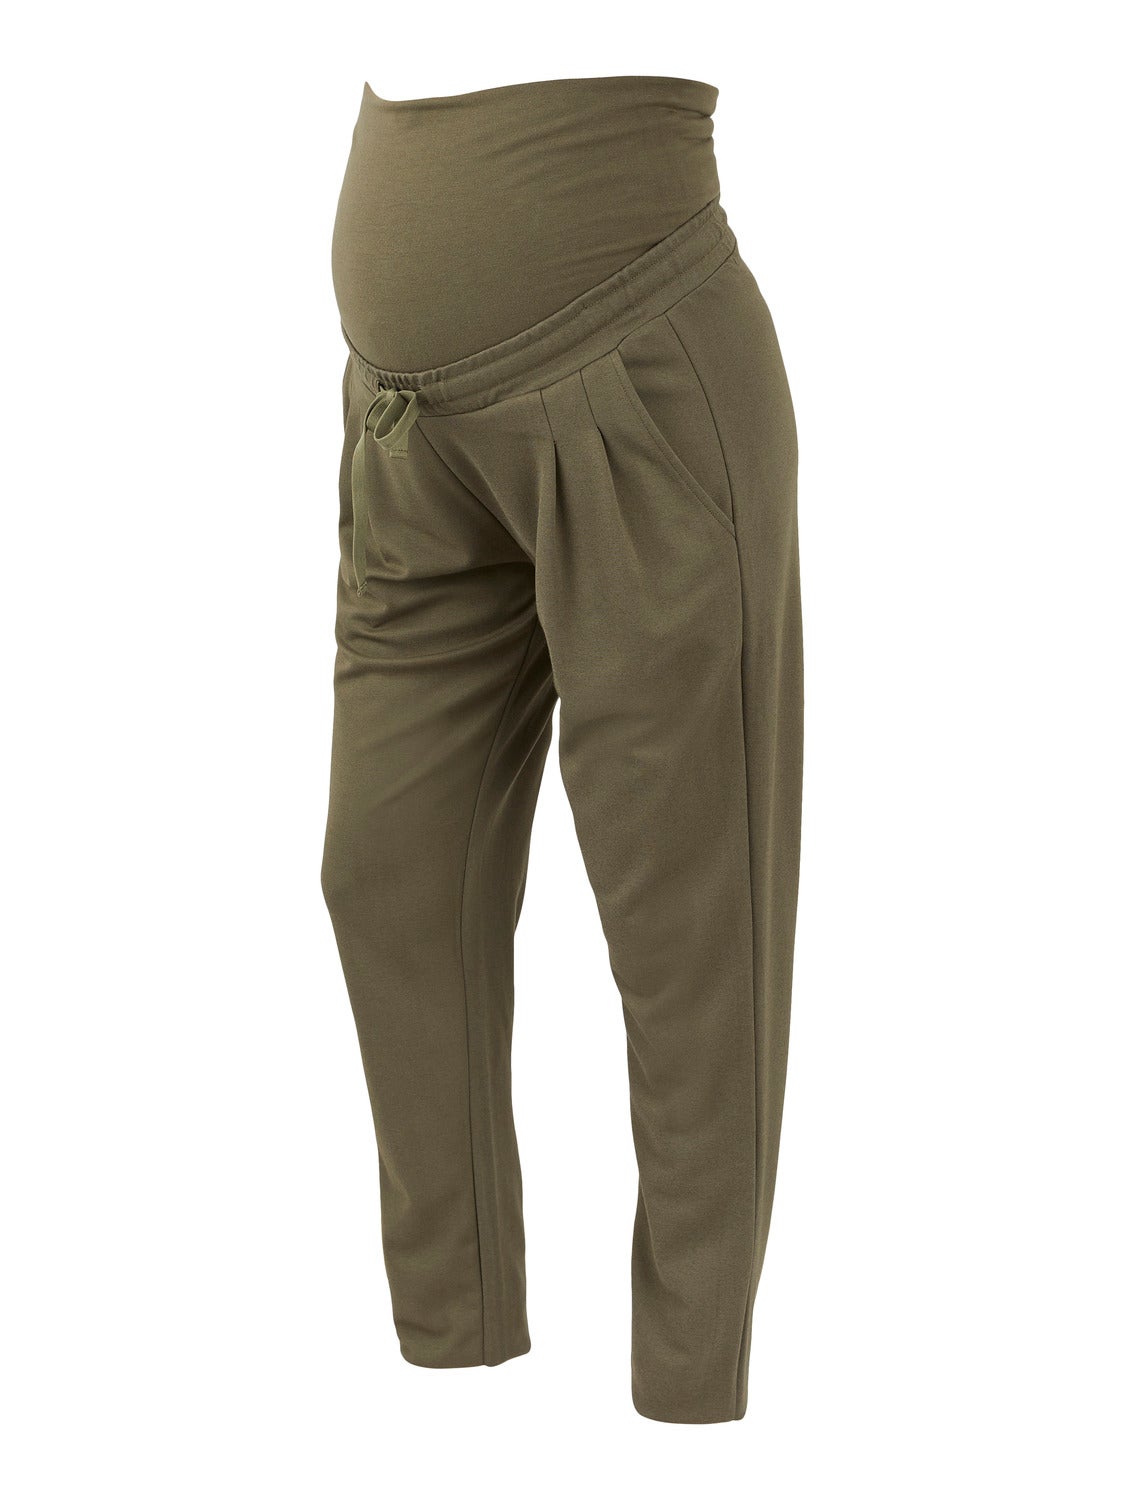 Buy Khaki Green Maternity Utility Cargo Trousers from Next USA